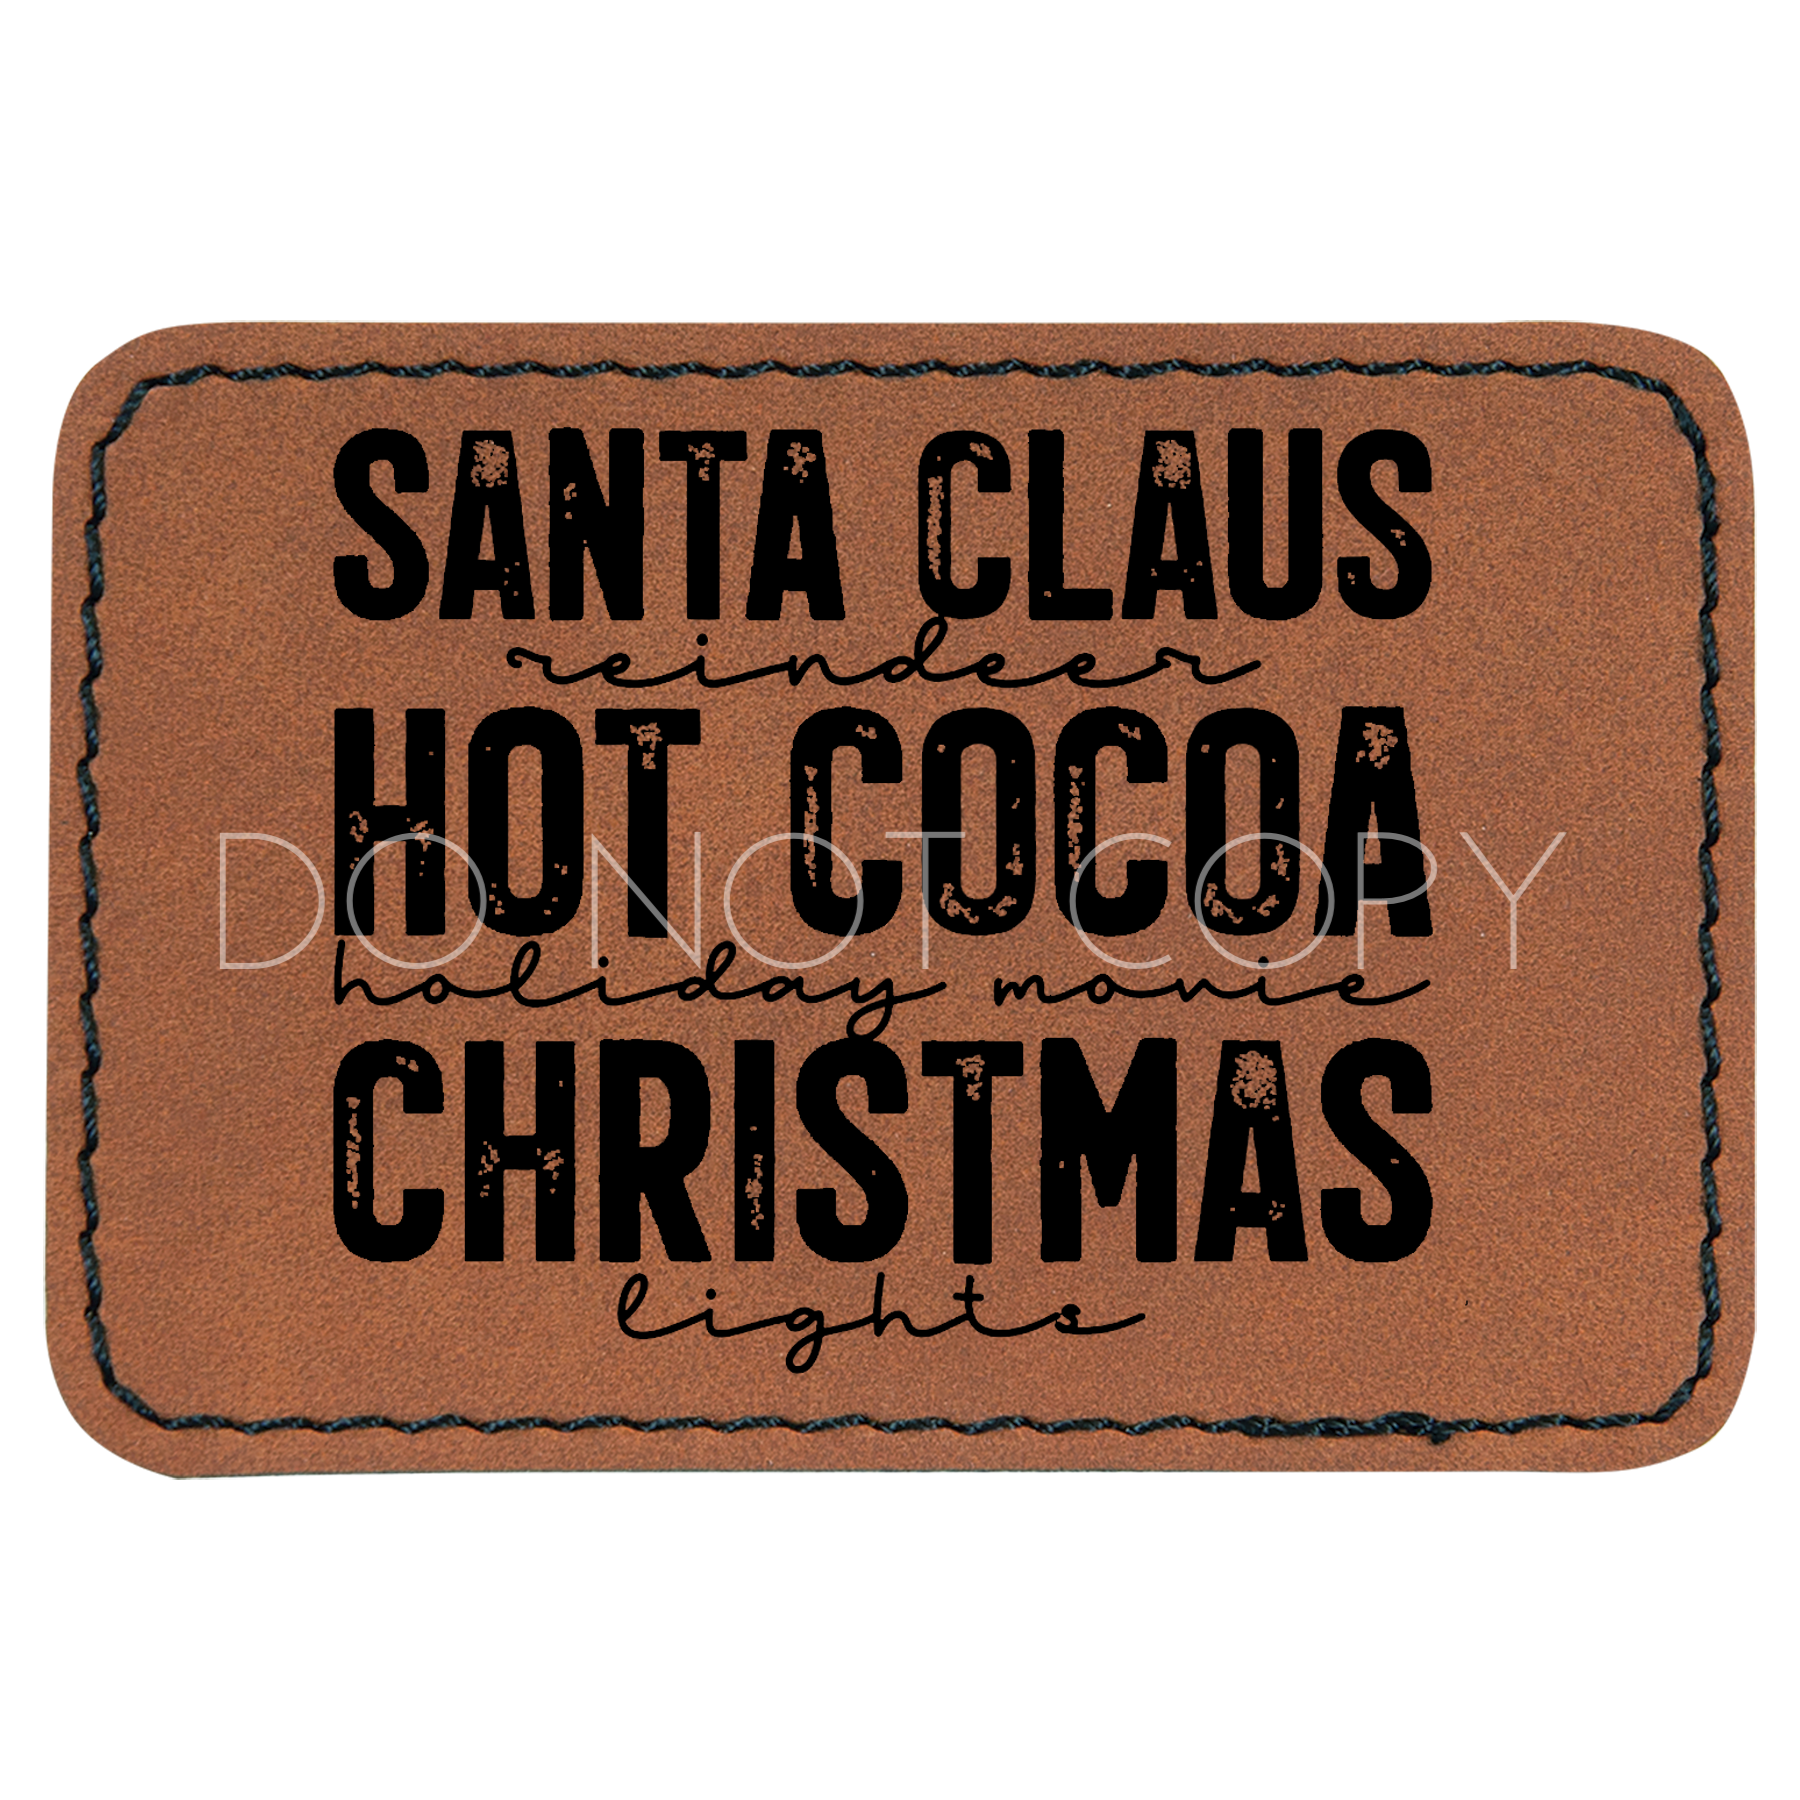 Santa Claus, Hot Cocoa, Christmas Patch